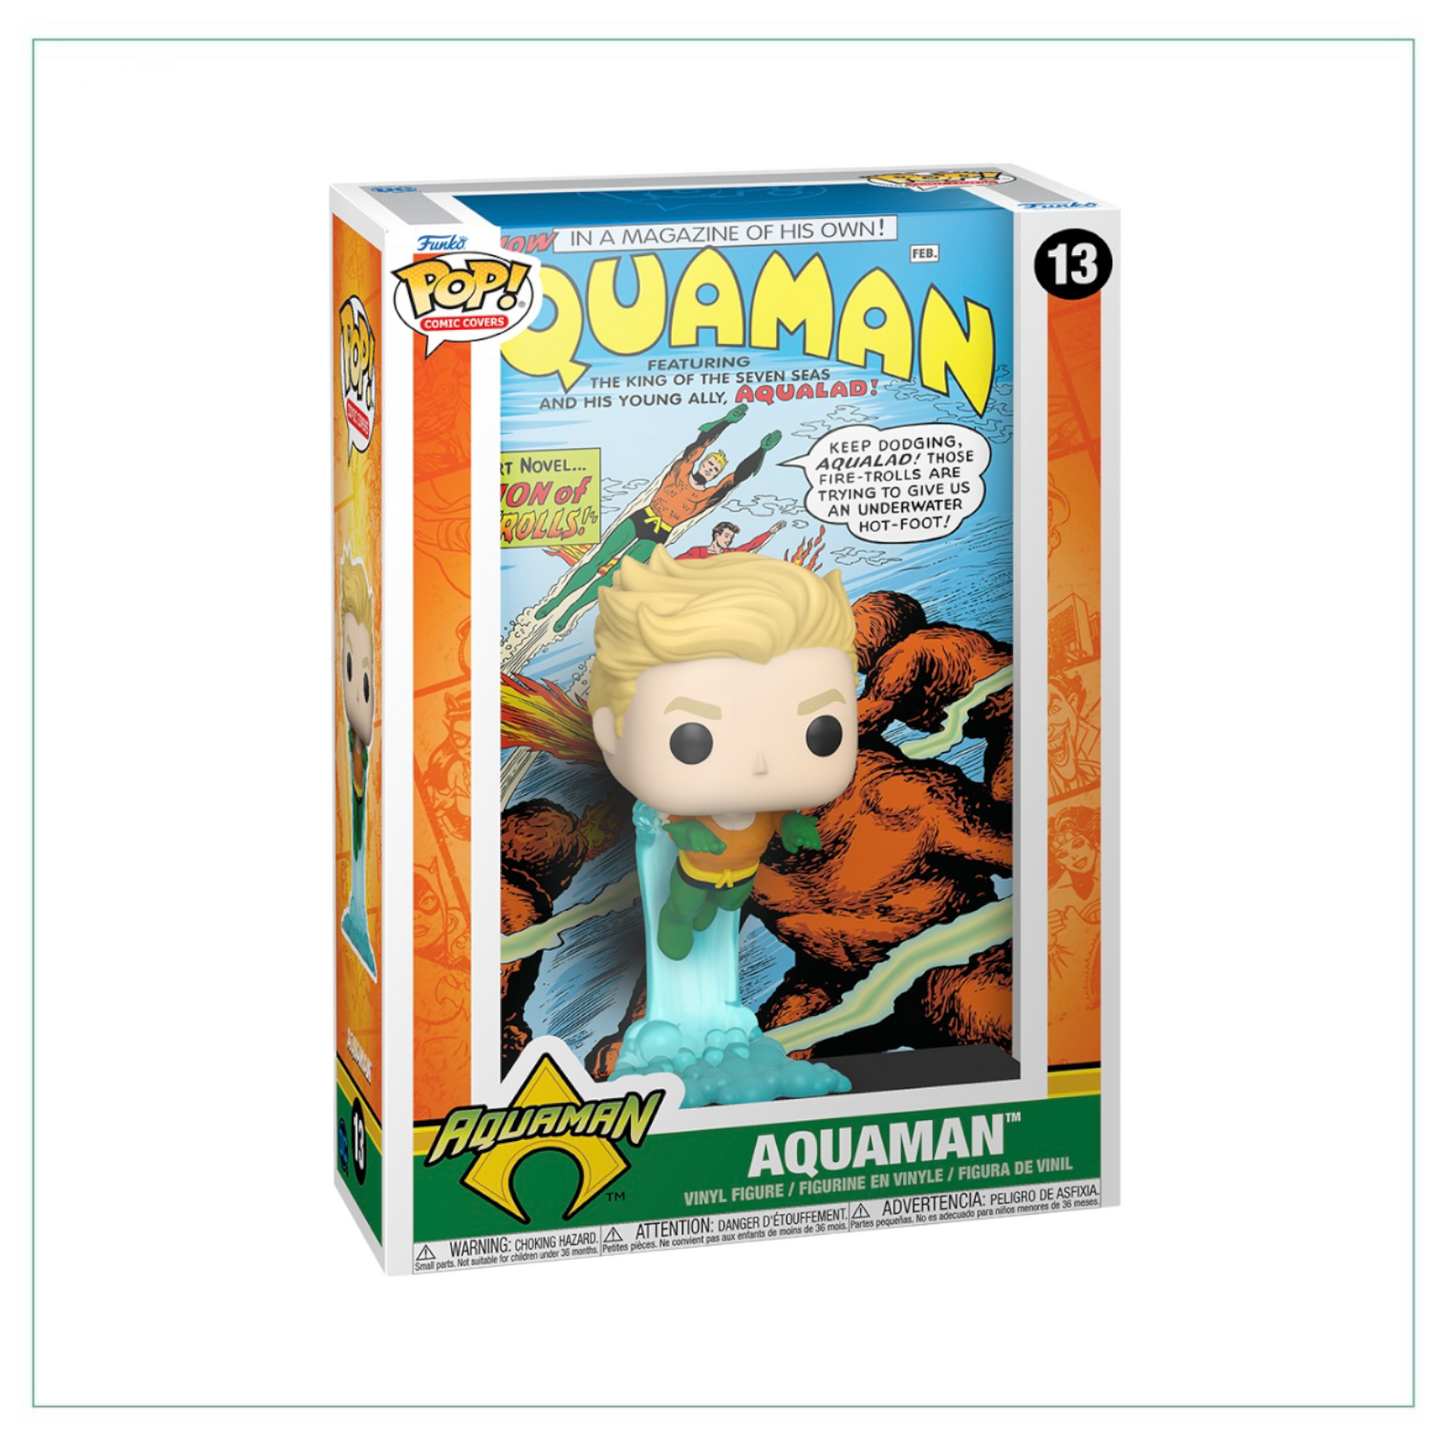 Aquaman #13 Funko Pop! Comic Cover Aquaman - Angry Cat